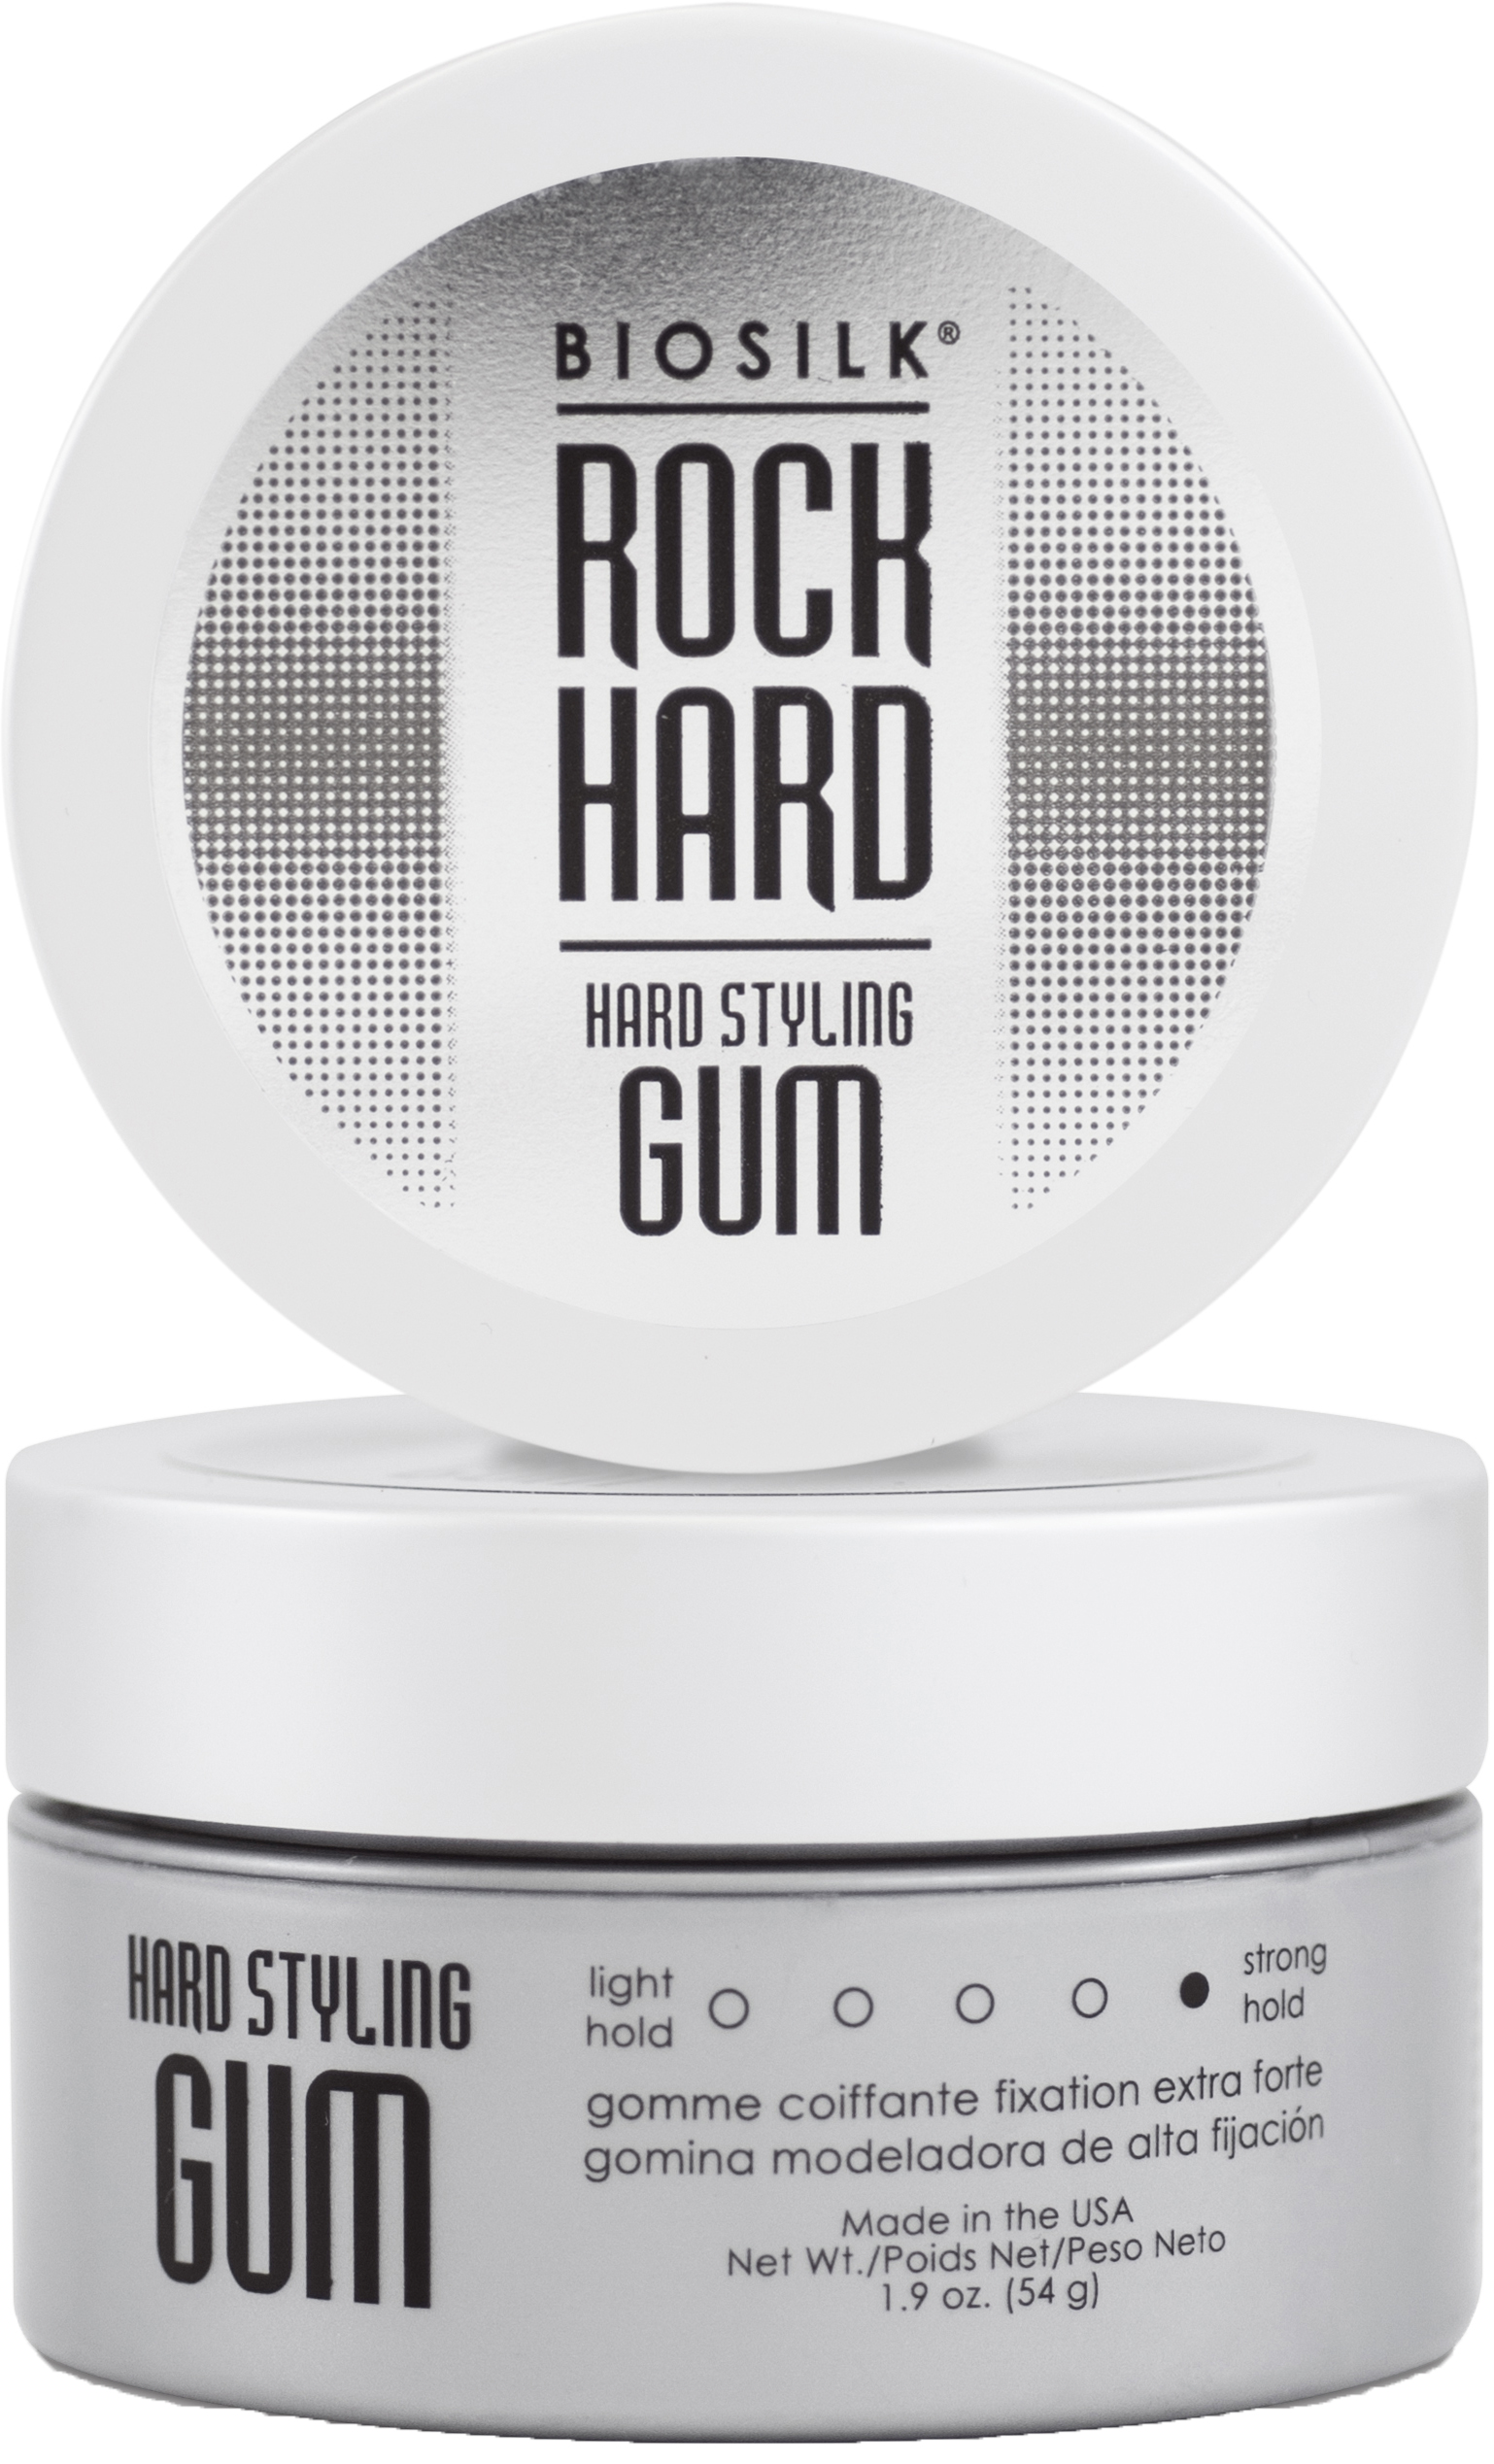 BioSilk Rock Hard Styling Gum 54g